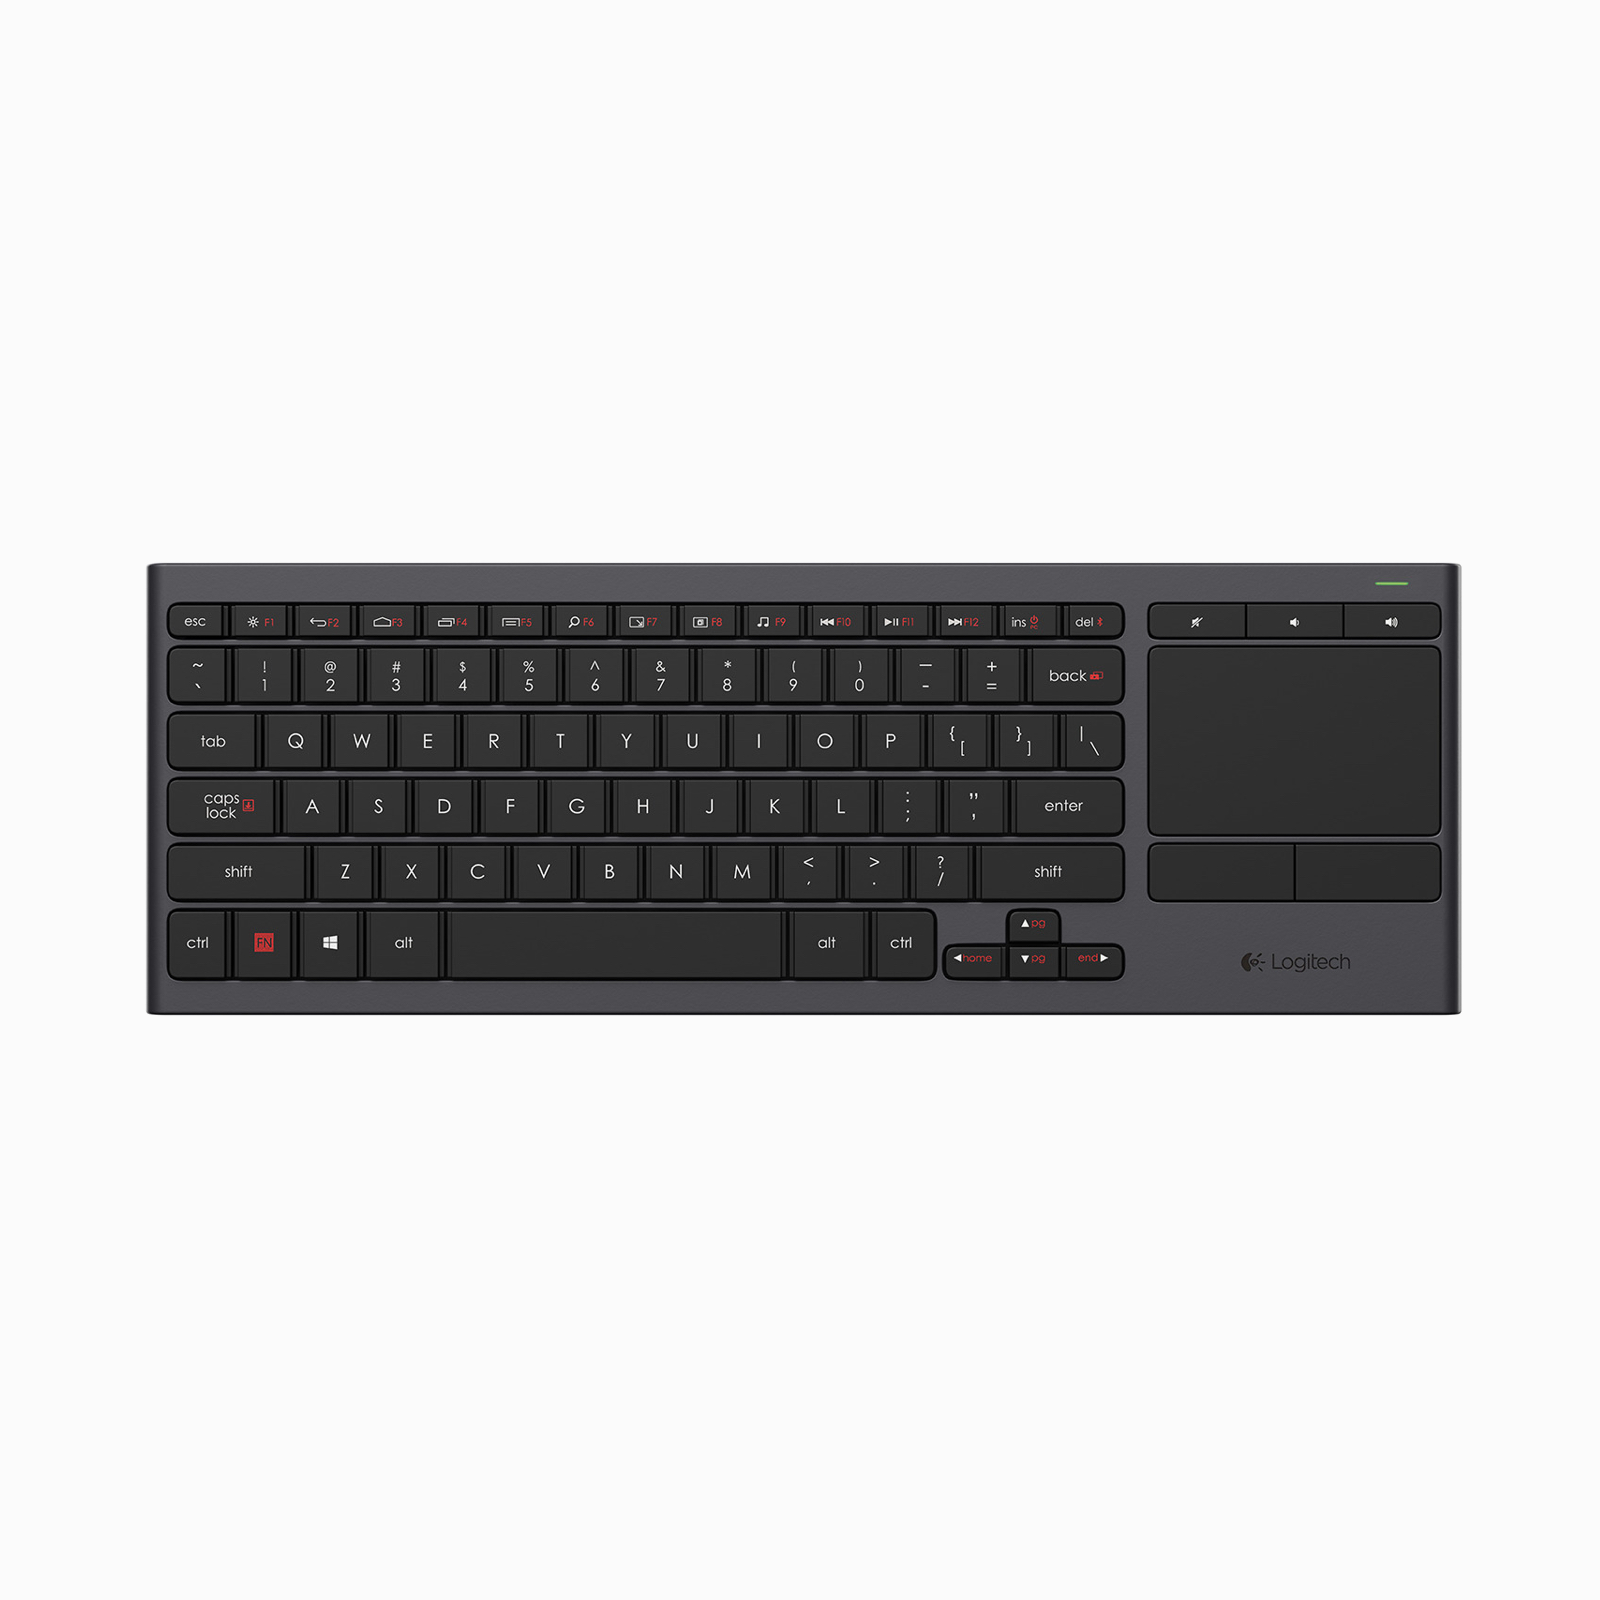 A Logitech K830 Keyboard in black, viewed from above.